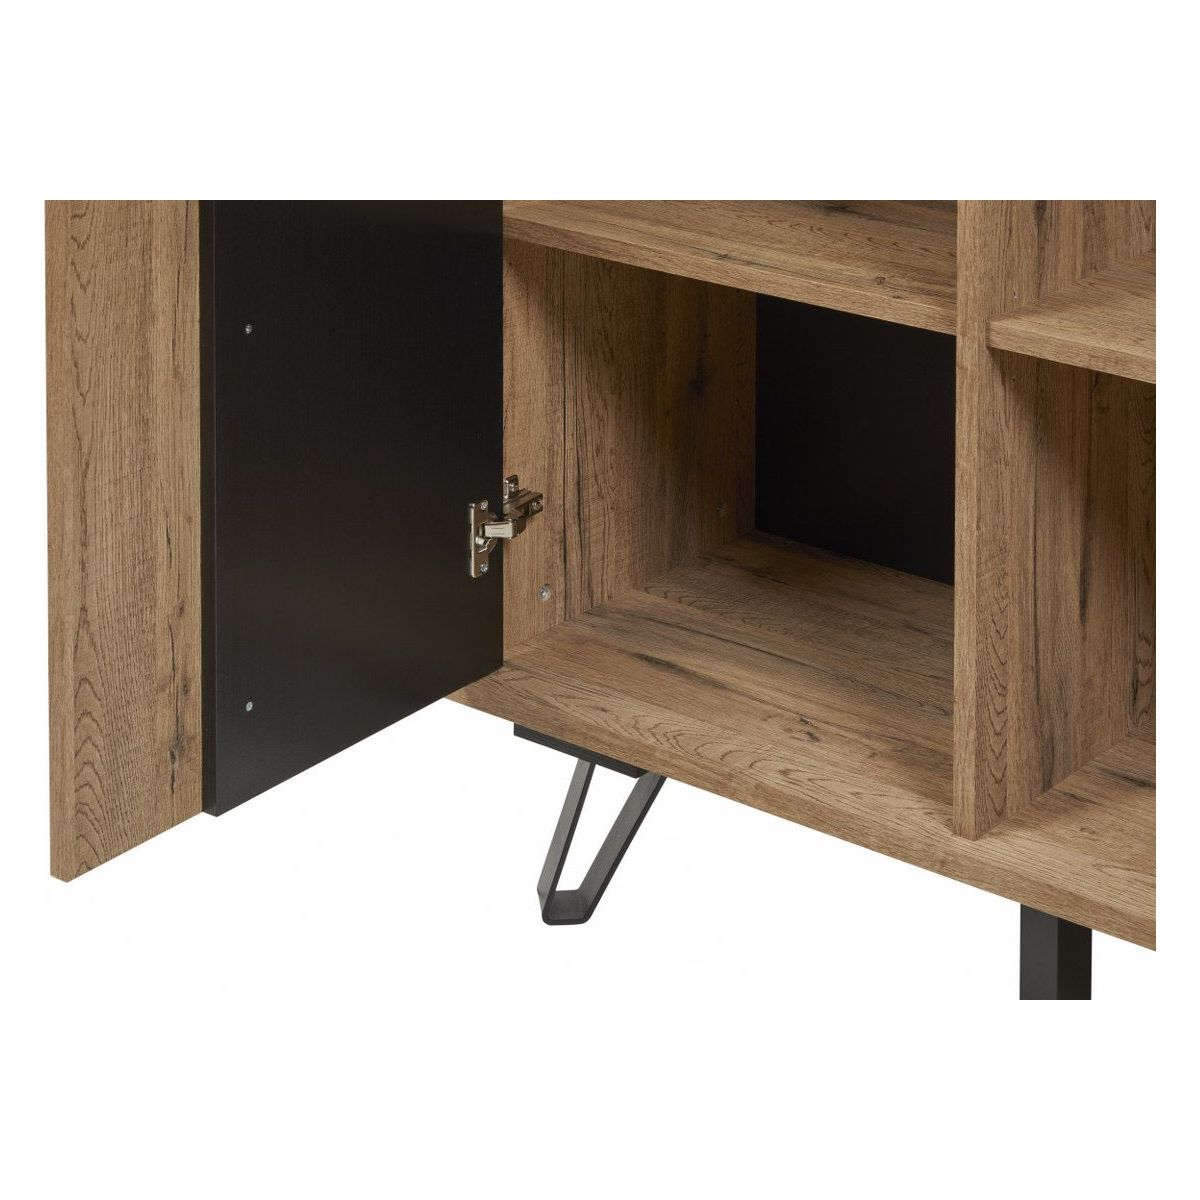 Wall cabinet | Furniture series Manor | brown, natural, black | 101 x